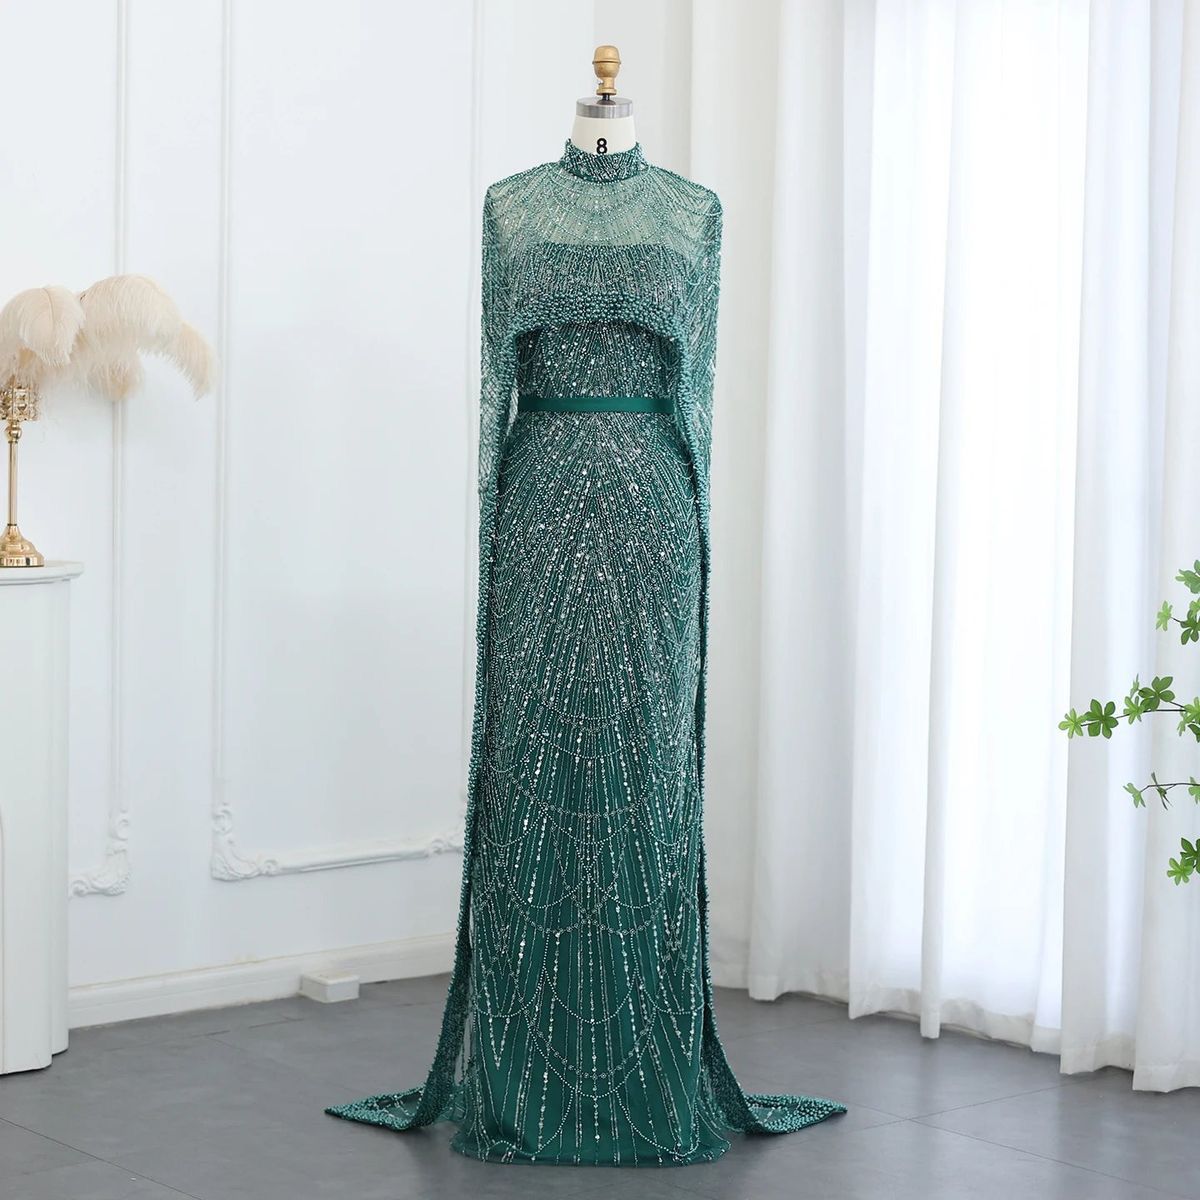 Luxury High Neck Mermaid Emerald Green Pearl Maxi Evening Dress/Gown